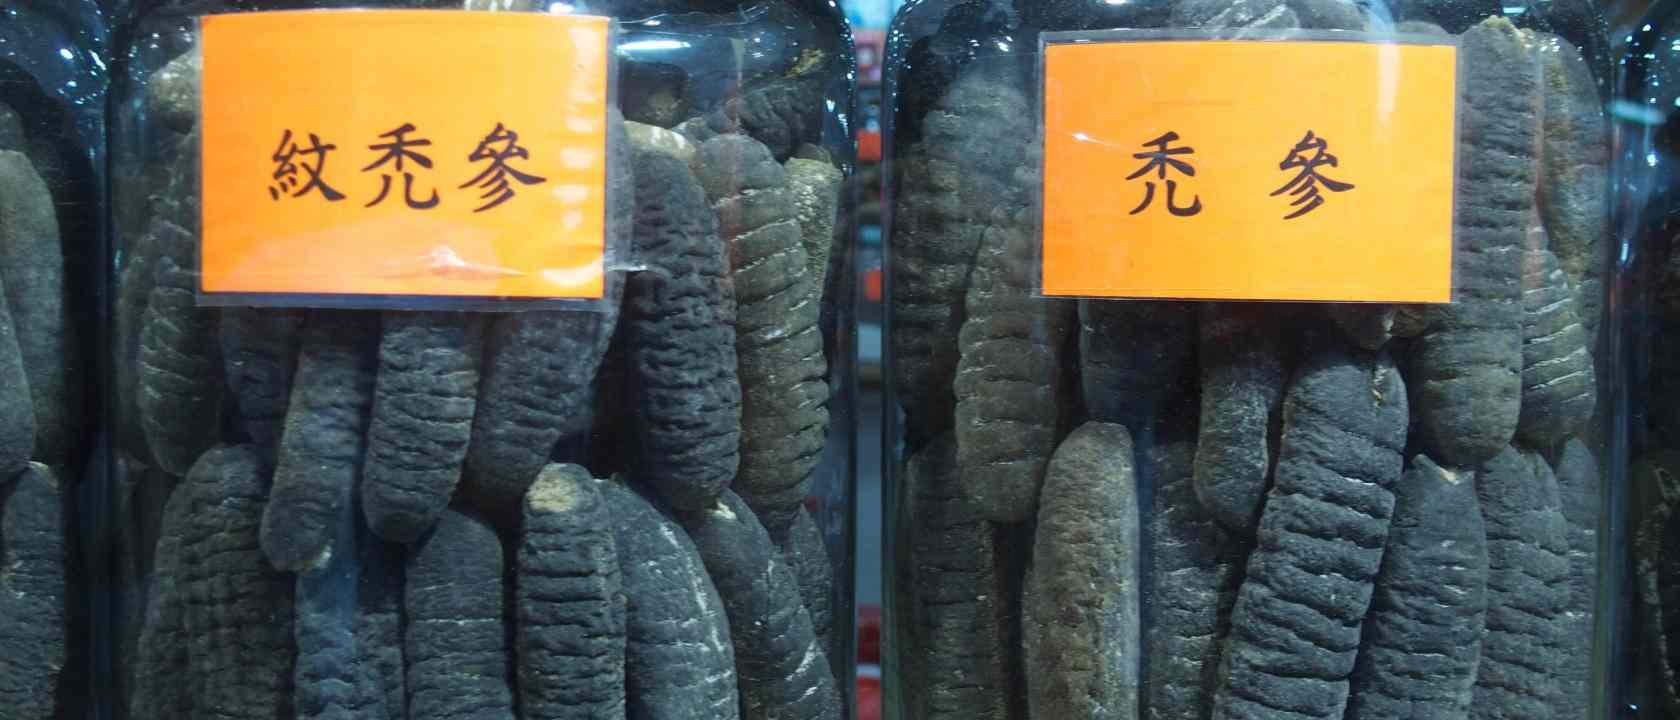 Dried sea cucumbers